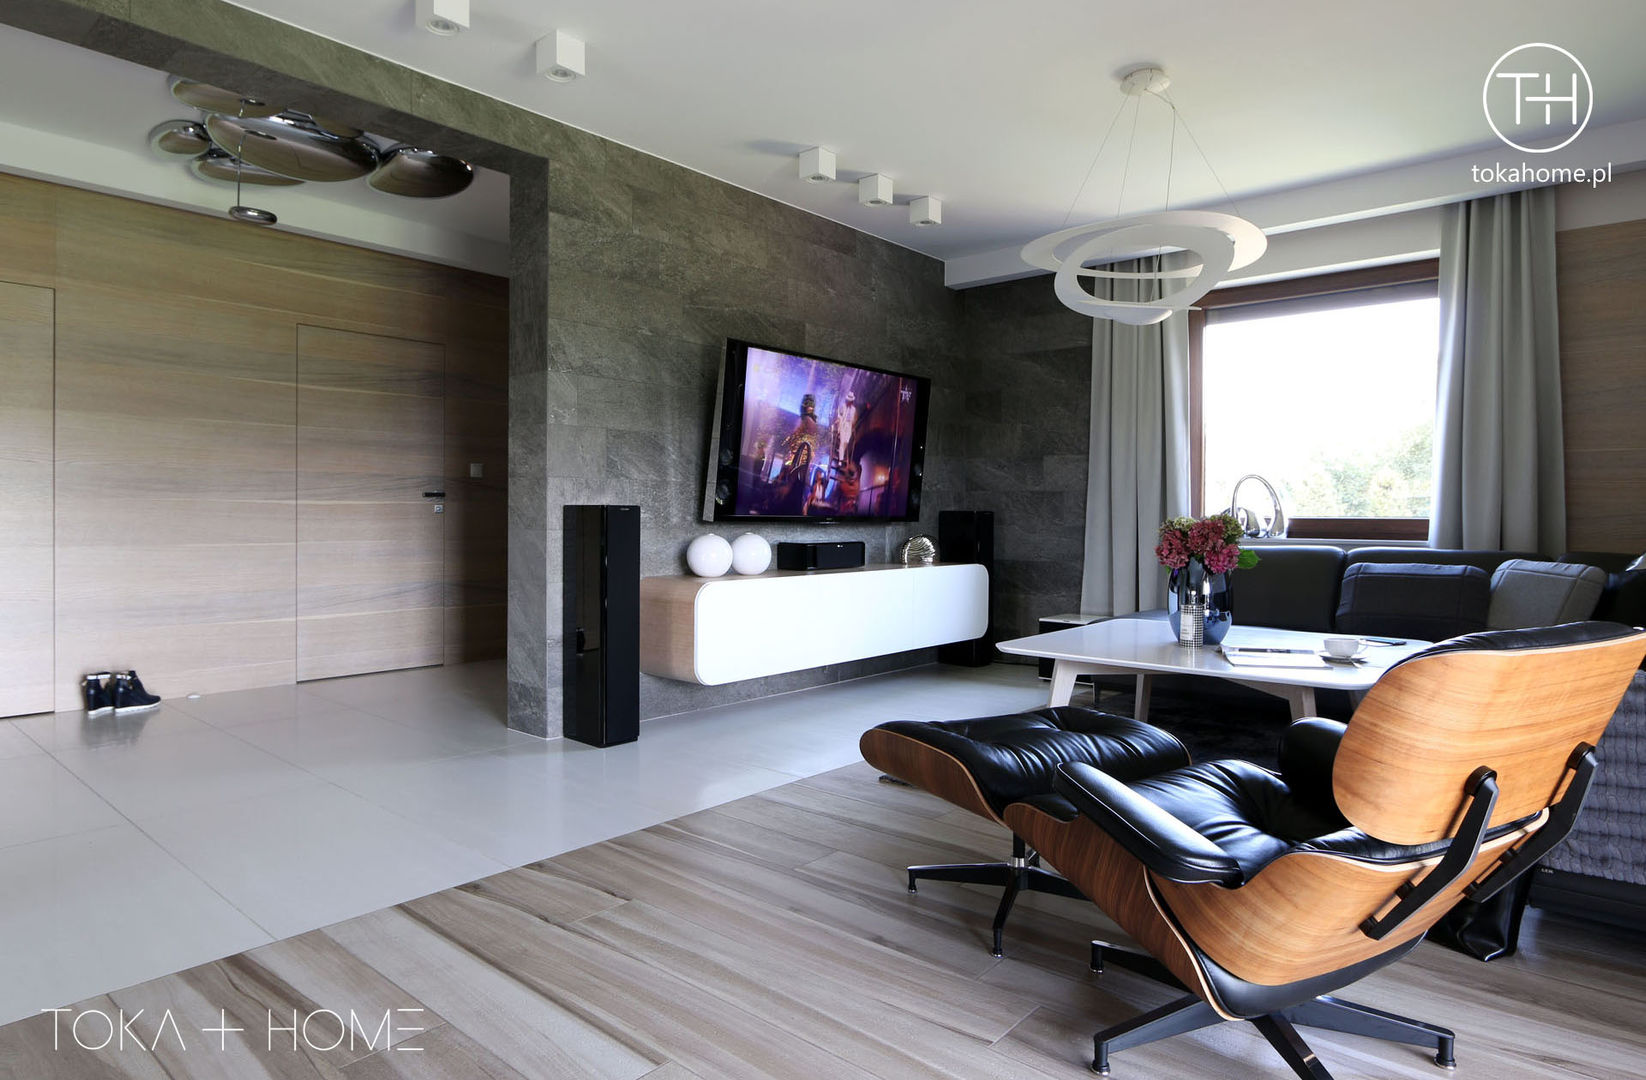 STYLOWY ANTRACYT, TOKA + HOME TOKA + HOME Living room Wood Wood effect